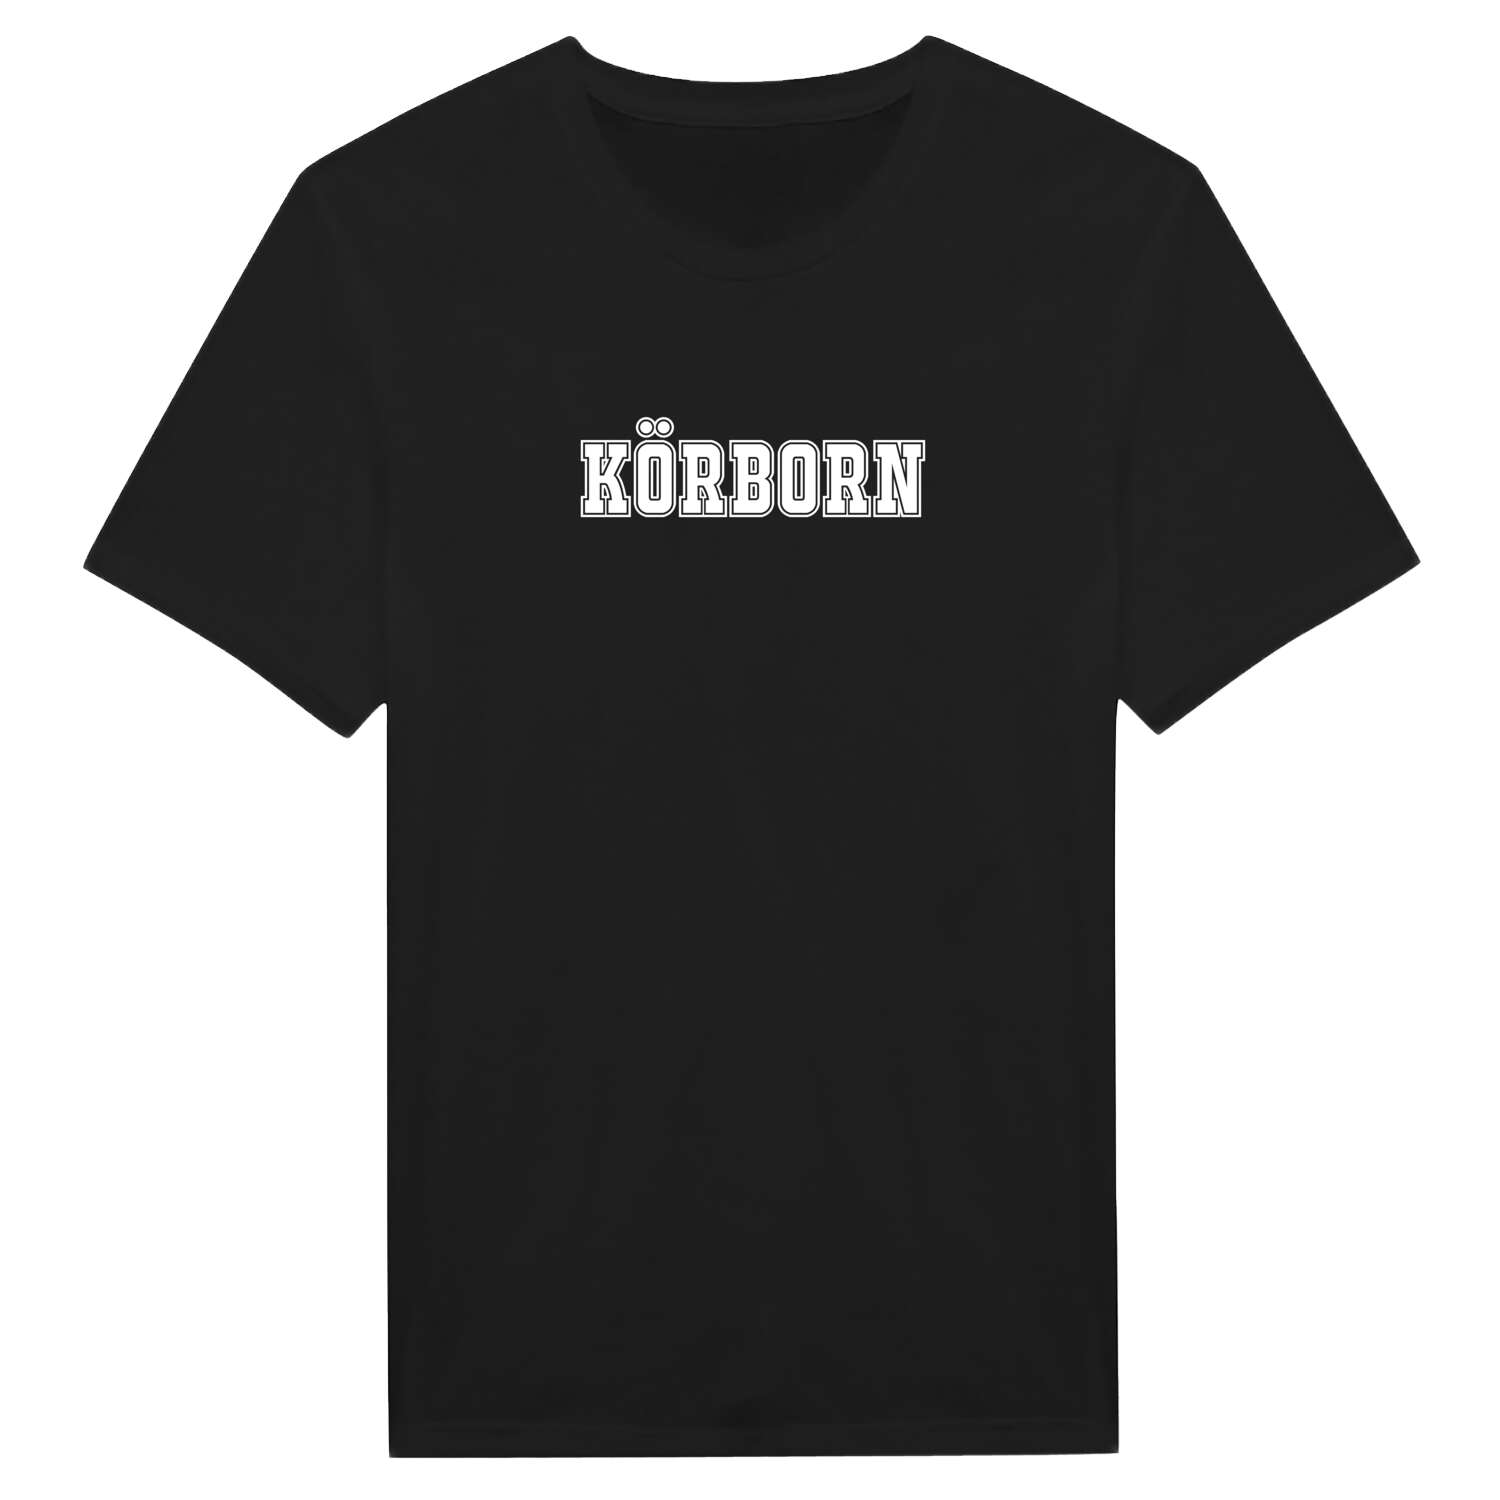 Körborn T-Shirt »Classic«